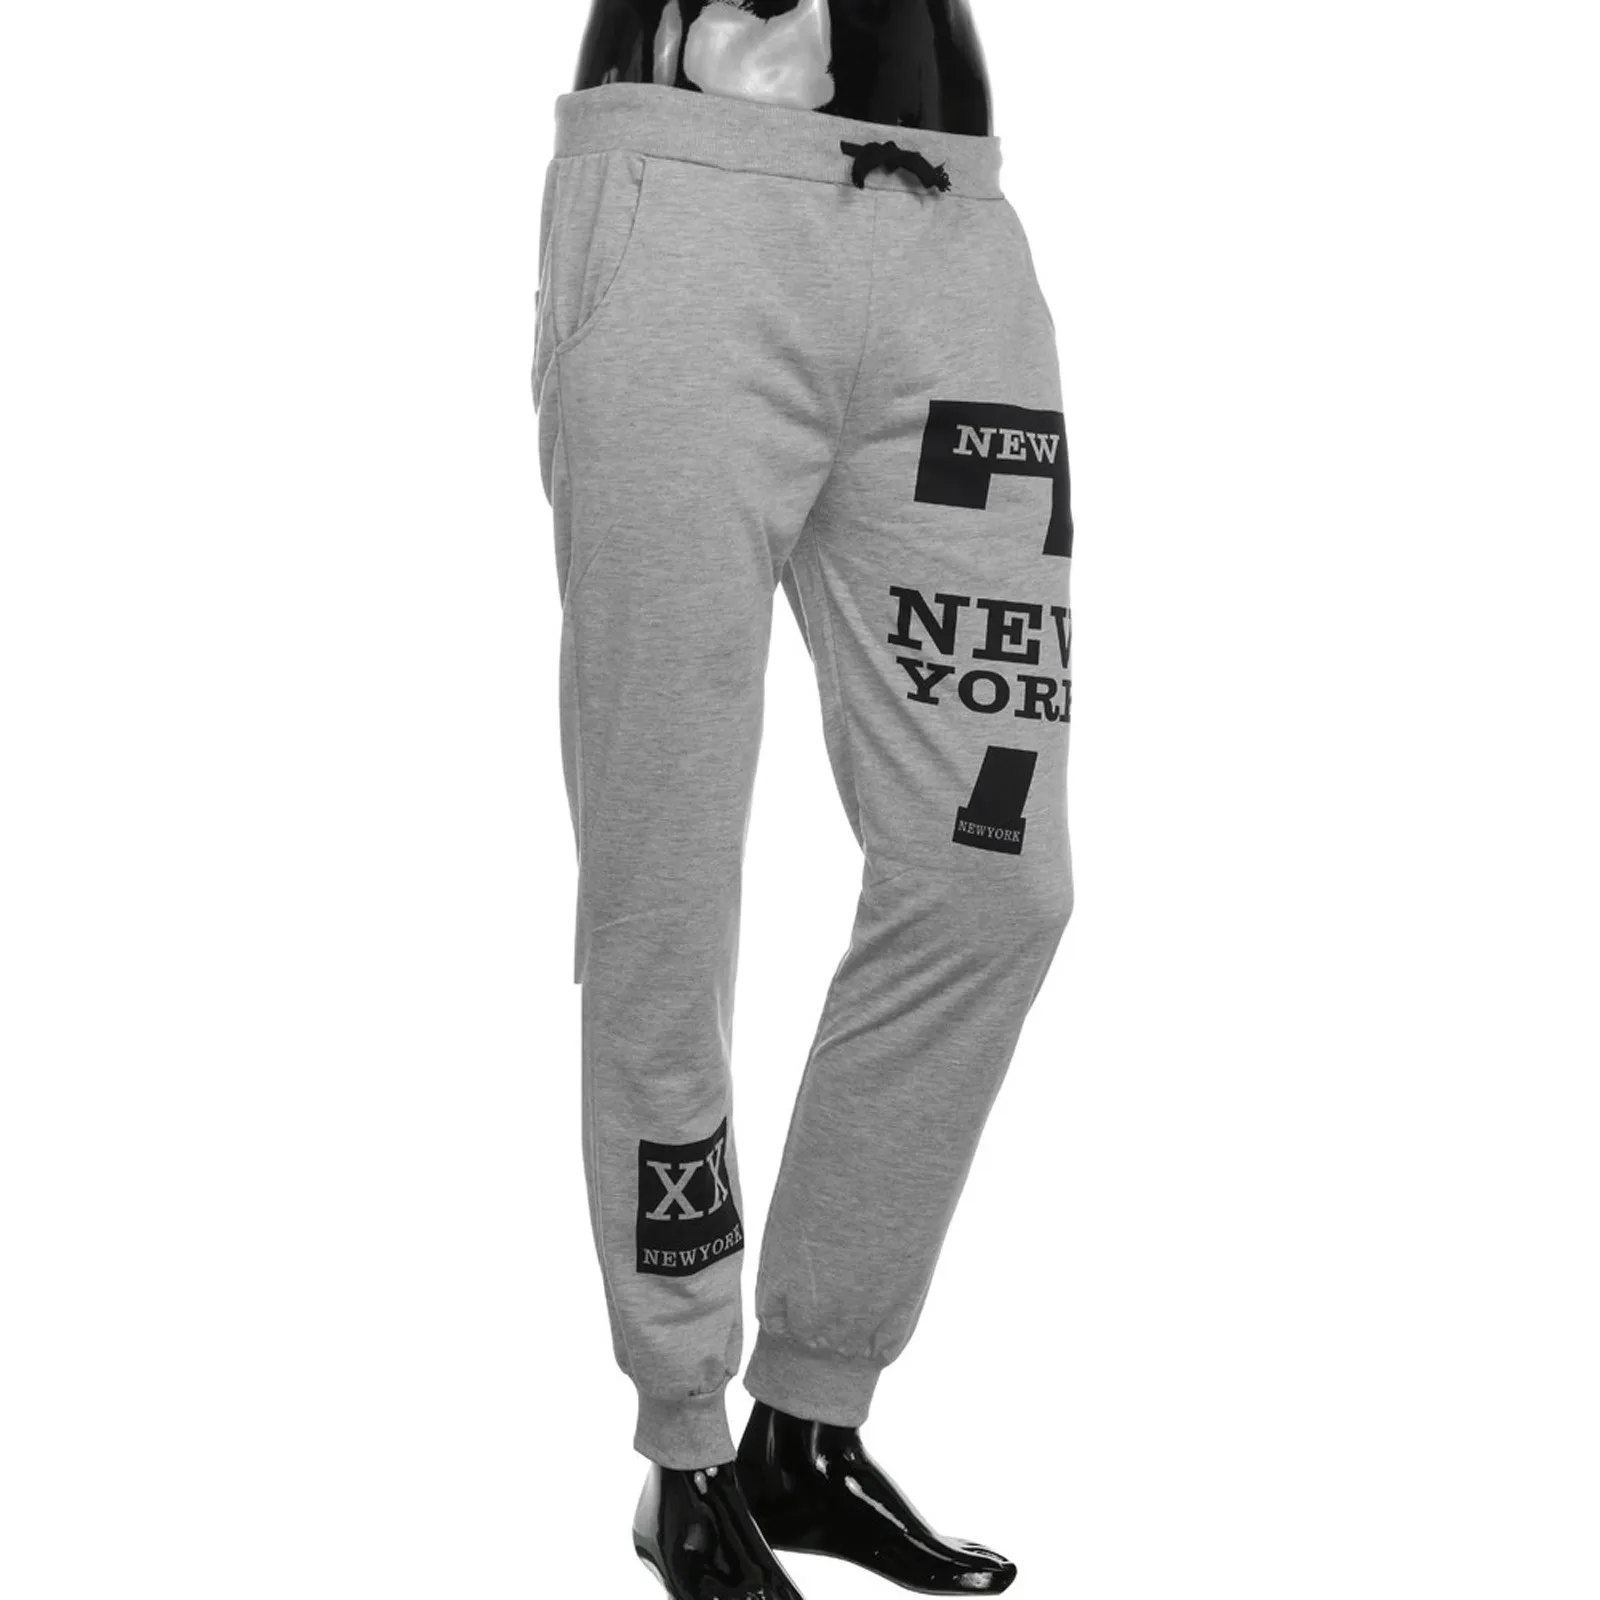 khaki cargo pants 2021 Jogging Pants Mens Trousers Summer Pants Casual Bandage Letter Printing Sweatpants Trousers Gym Men's Jogging Pants combat trousers